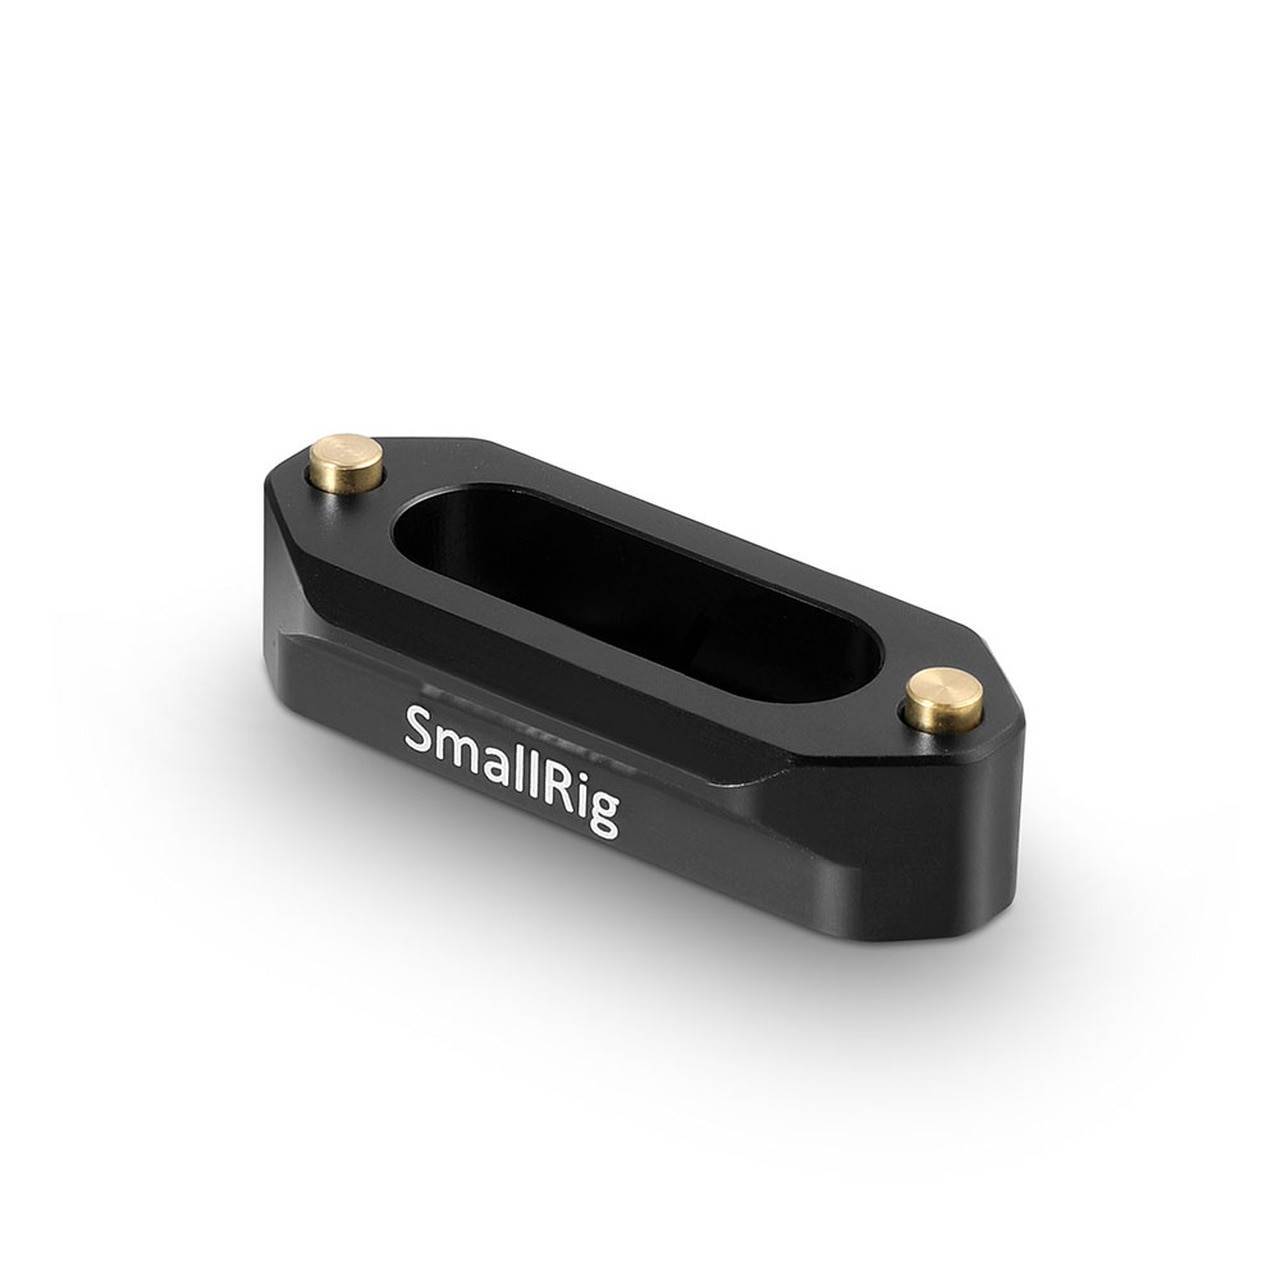 SmallRig Quick Release Güvenlik Rayı (46mm) 1409